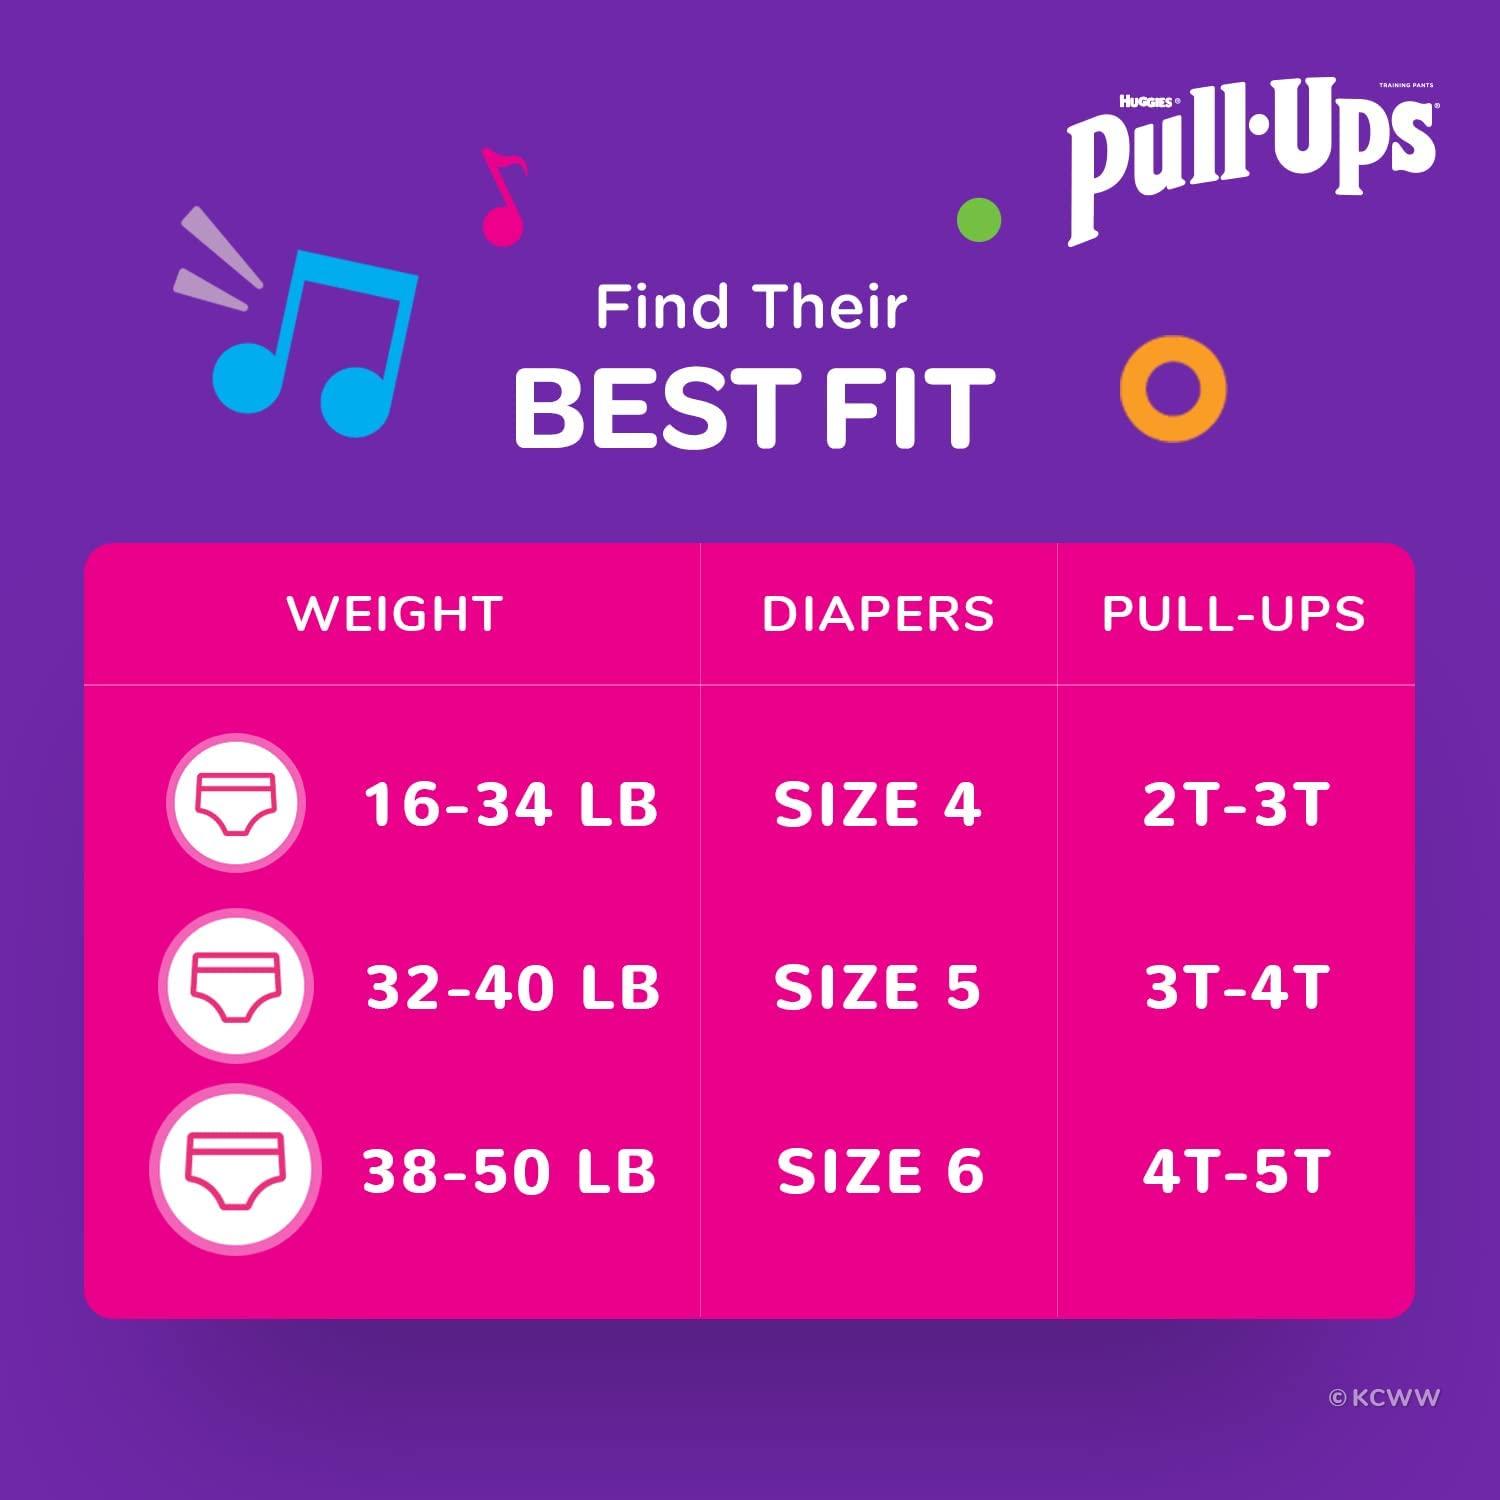 Pull-Ups Night-Time Girls' Potty Training Pants, 3T-4T (32-40 lbs